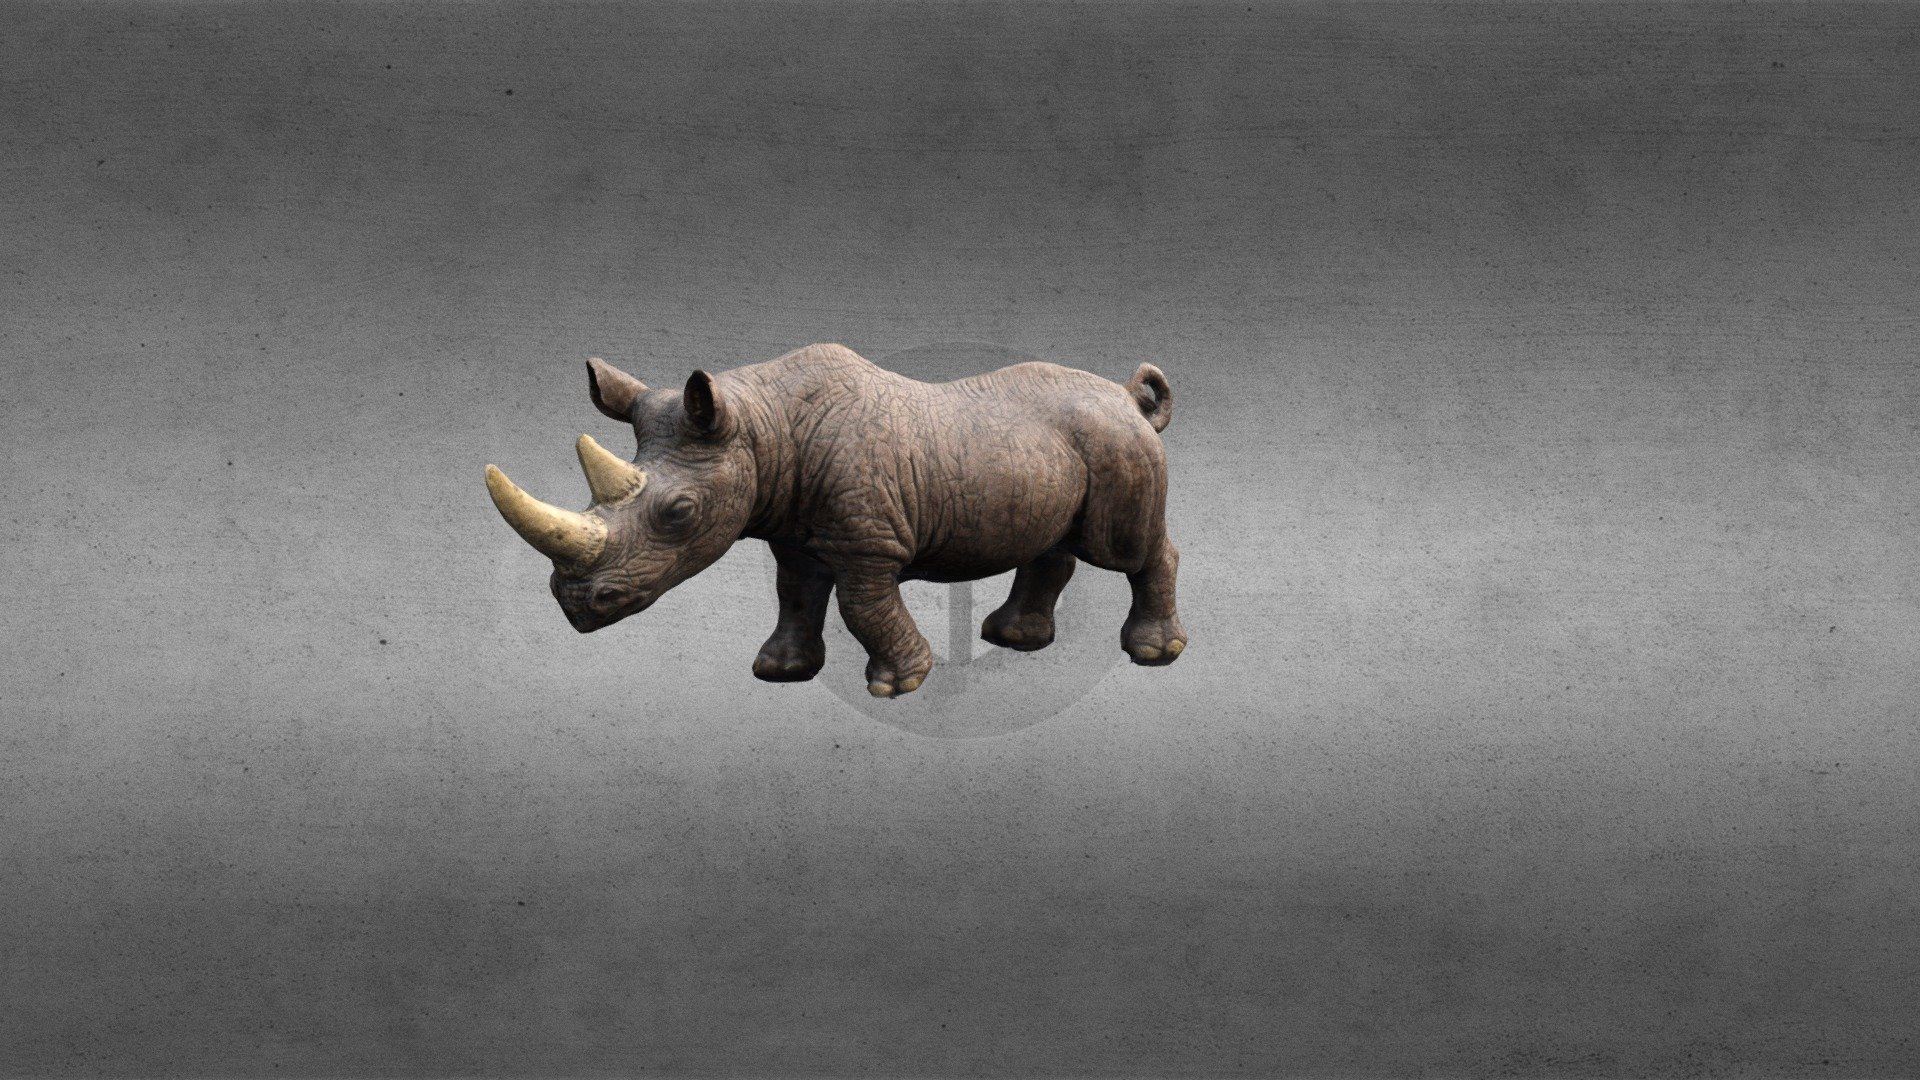 Rhinoceros 3D 7.30.23163.13001 for apple download free